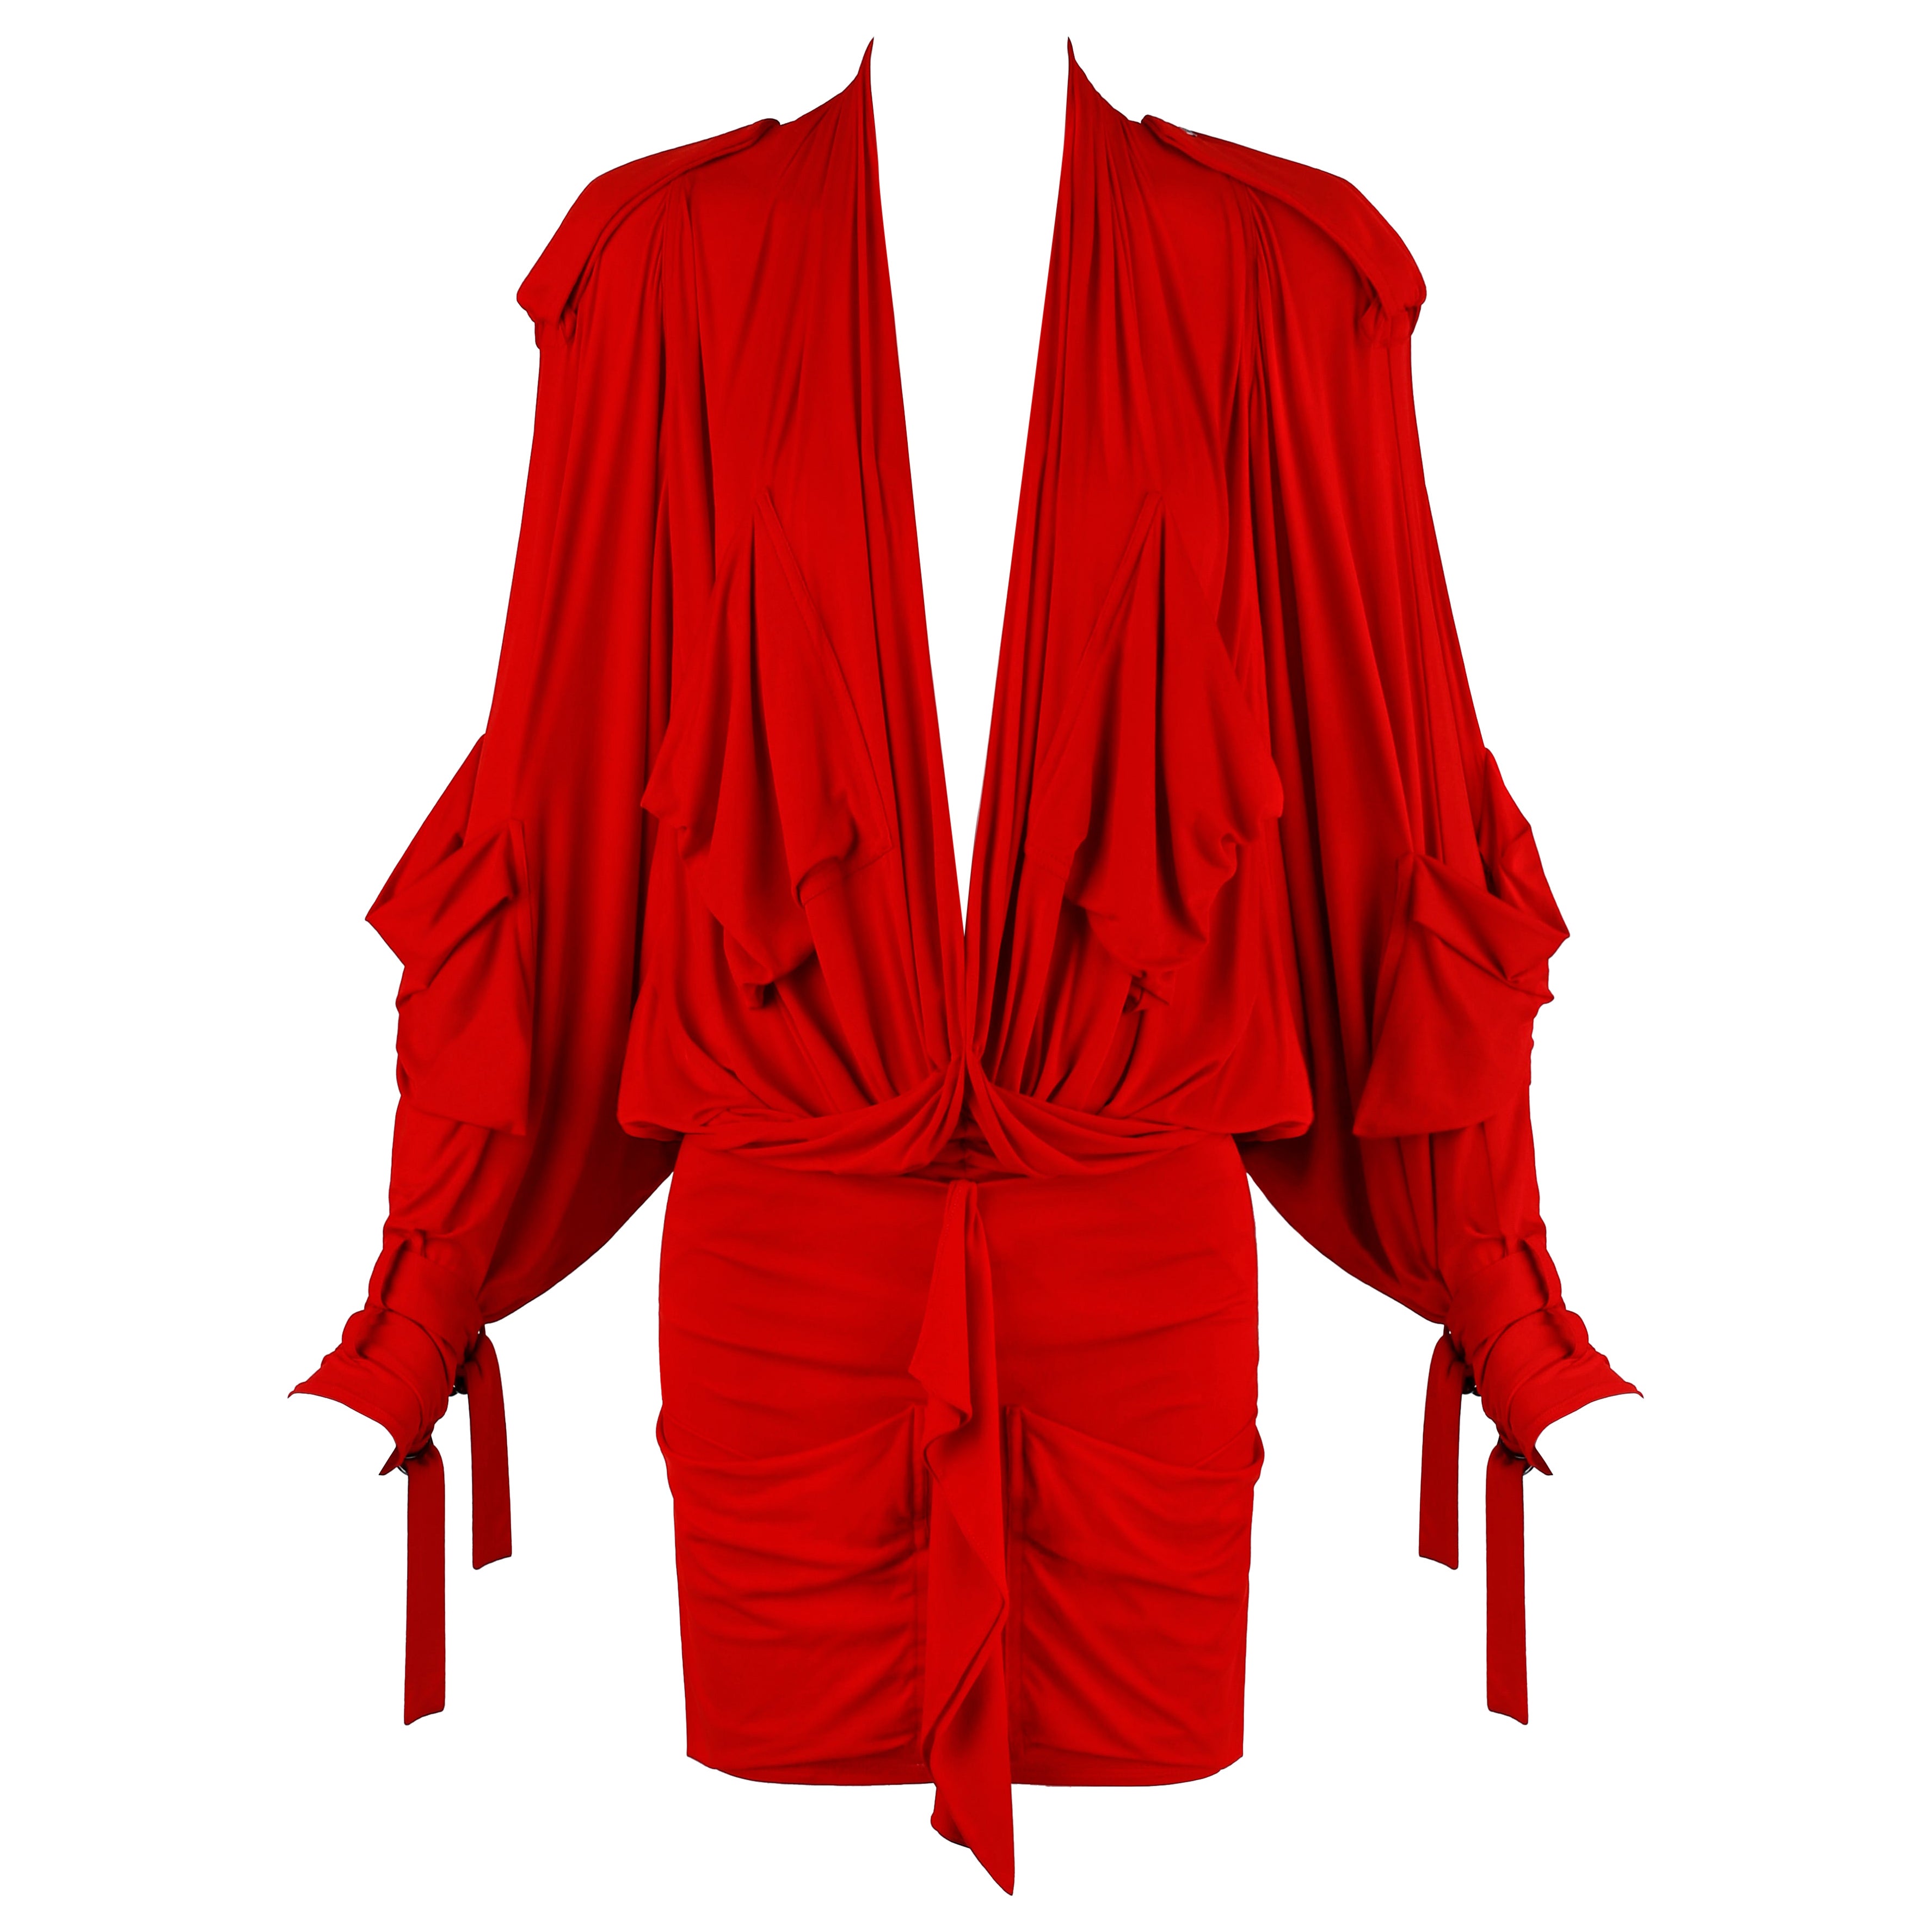 Christian Dior John Galliano S/S 2003 Red Plunge Draped Pocket Mini Dress For Sale